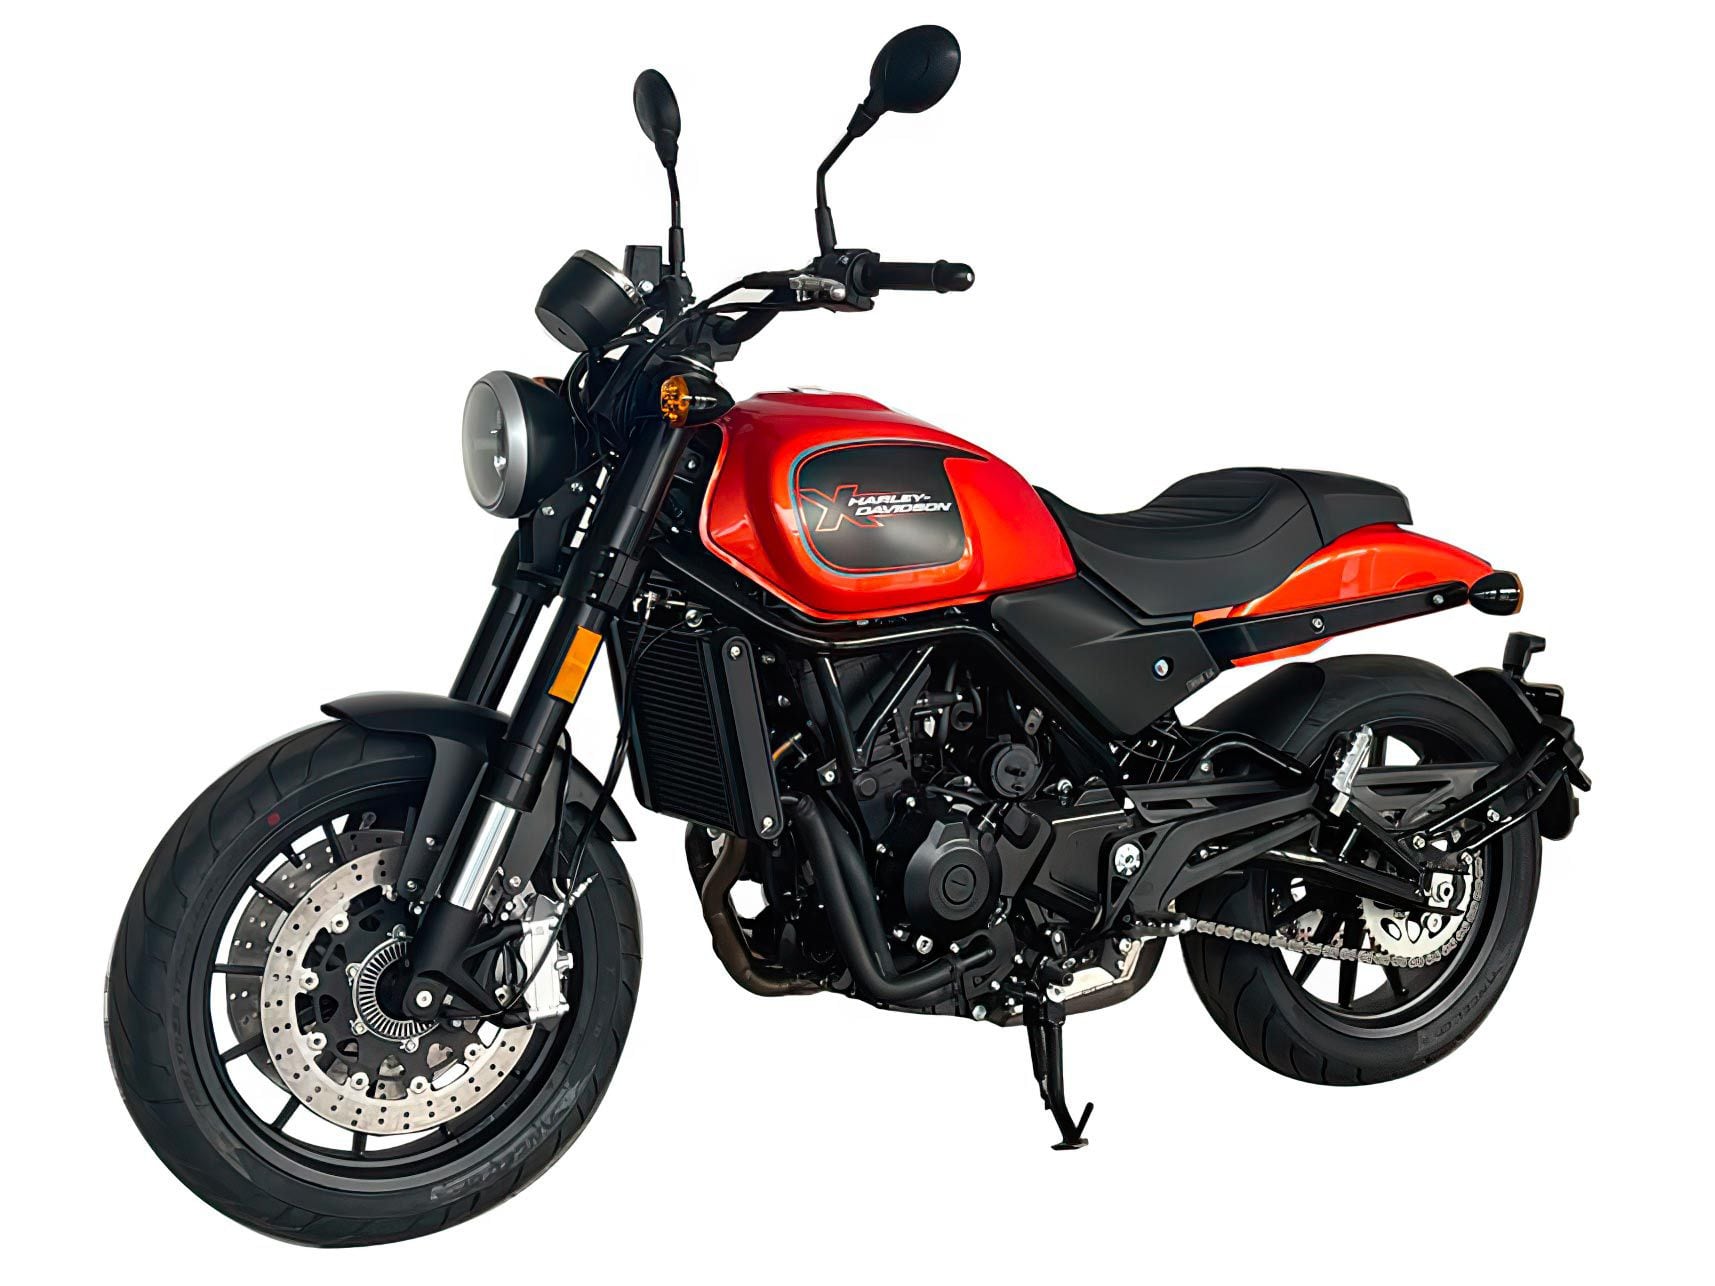 Harley-Davidson HD350 and HD500